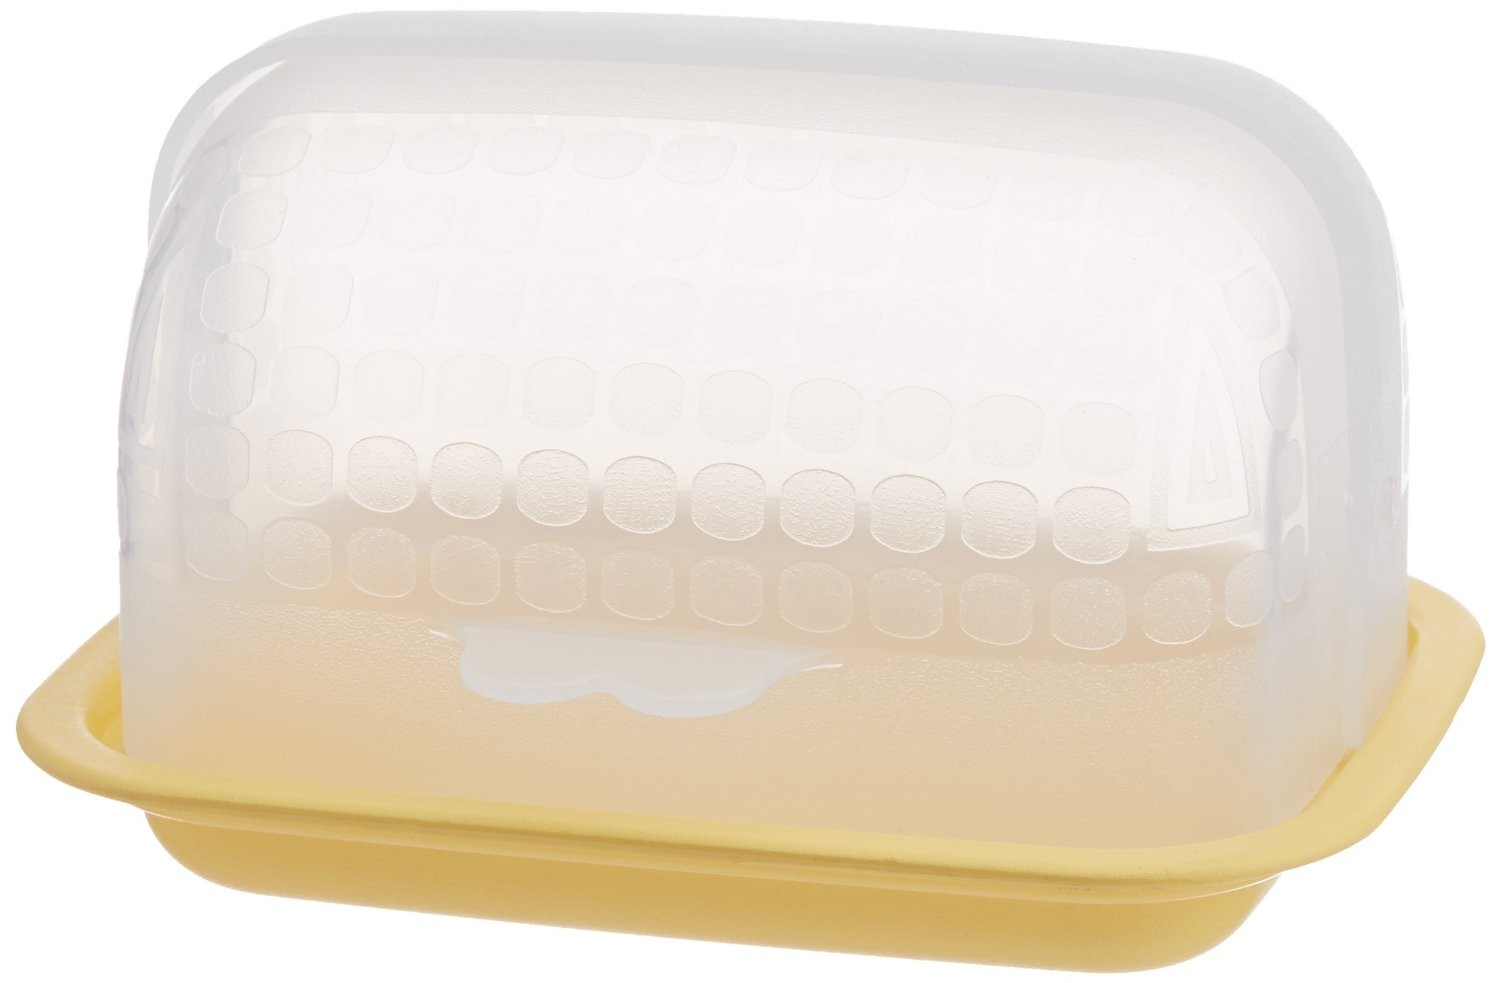 Signoraware Small Butter Box, Lemon Yellow 